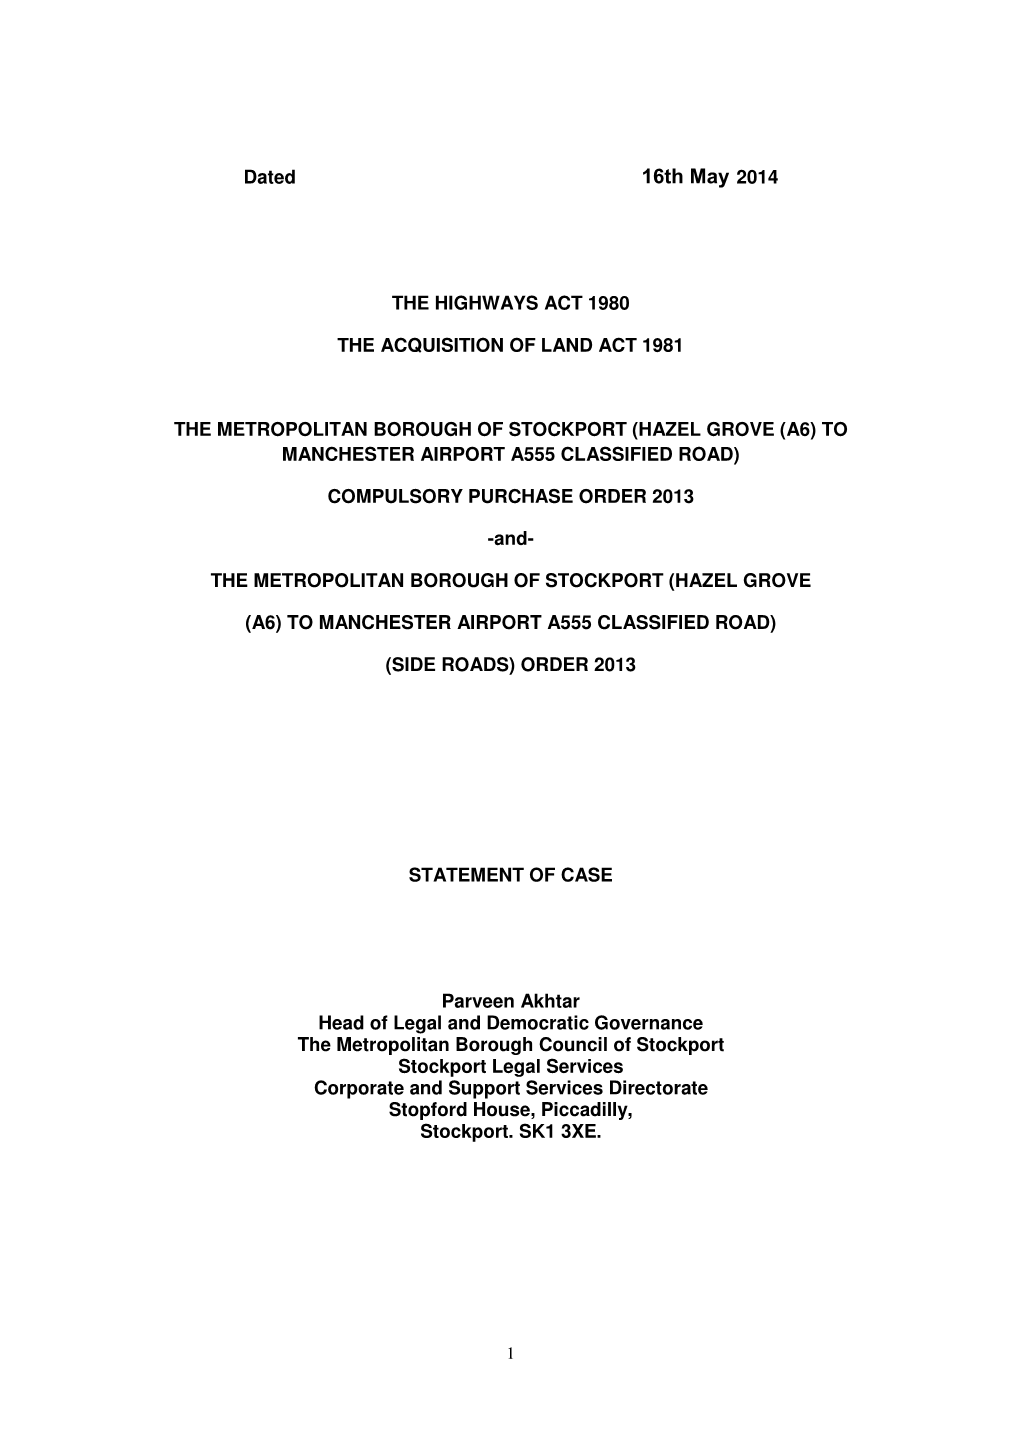 Statement of Case (PDF 1.4Mb)